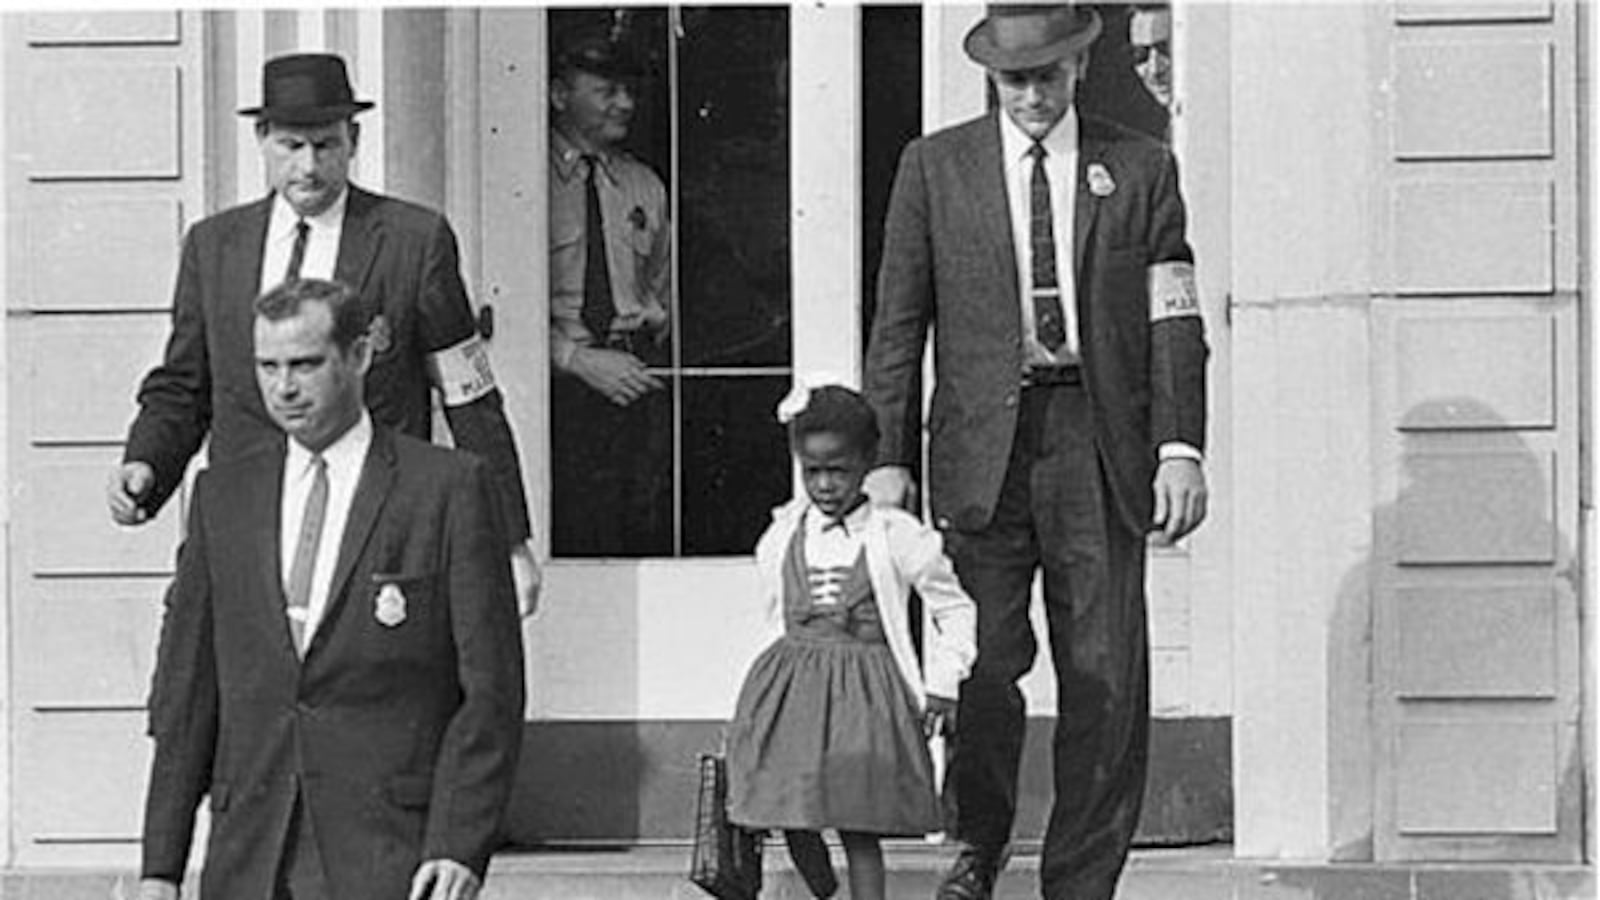 U.S. marshals escort Ruby Bridges to William Frantz Elementary School in New Orleans in 1960.